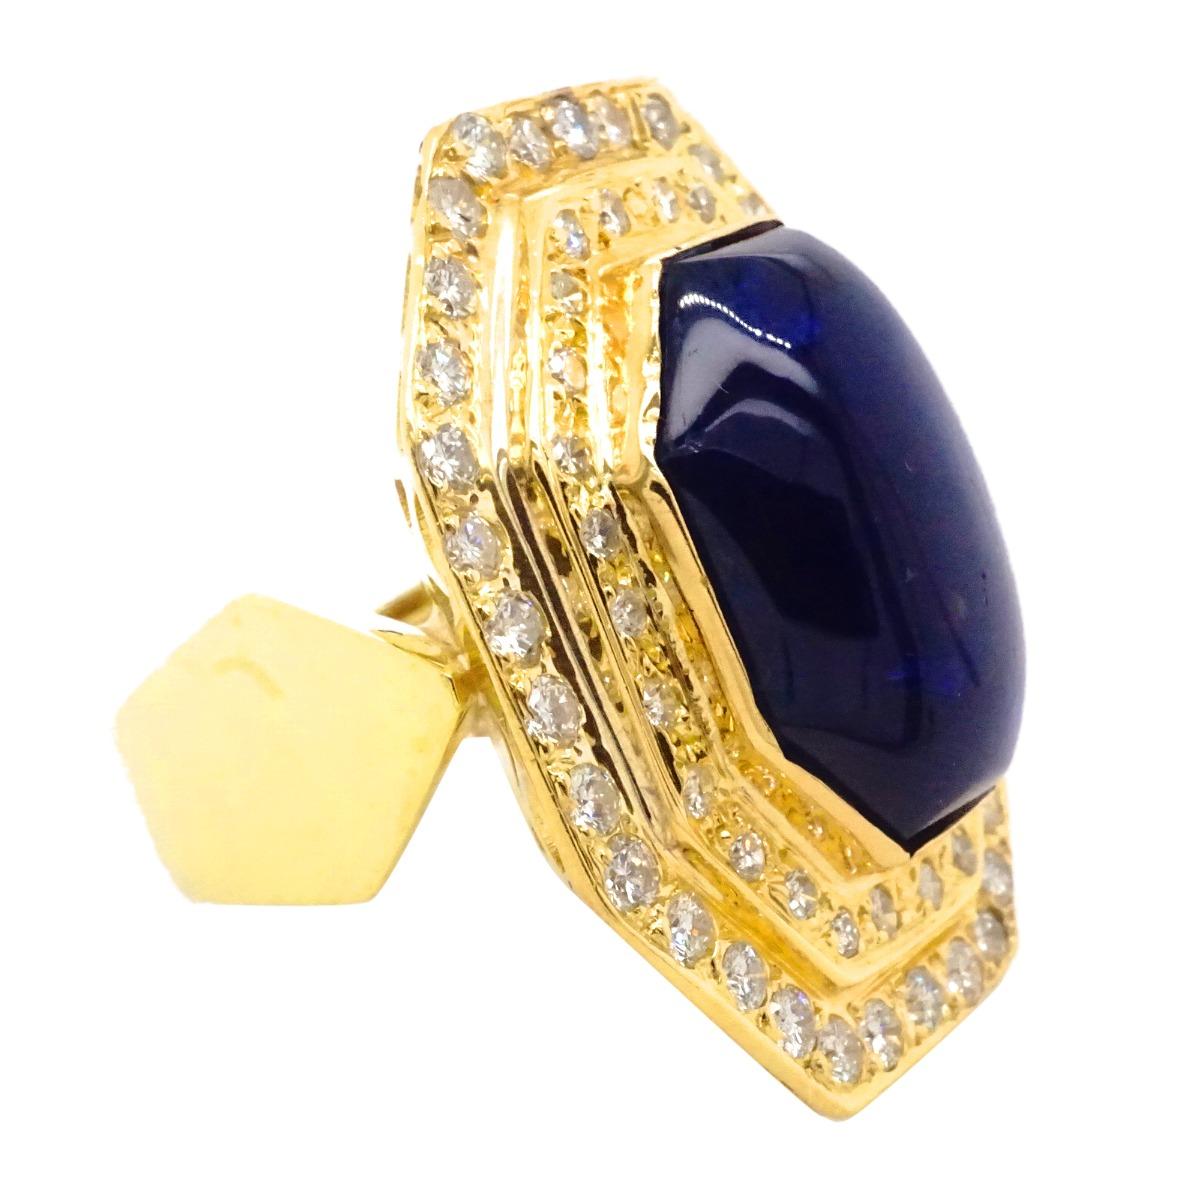 18K Yellow Gold Giant 20CT Blue Sapphire Cabochon Octagon Top Diamond Ring
Metal: 18 K Yellow Gold
Finger Size: 6.5
Gram Weight: 24.3
Diamond Carat Weight: 2.58 CT
Diamond color: H-I
Diamond Clarity: VS1-VS2
Diamond Cut:  Round
Gemstone: